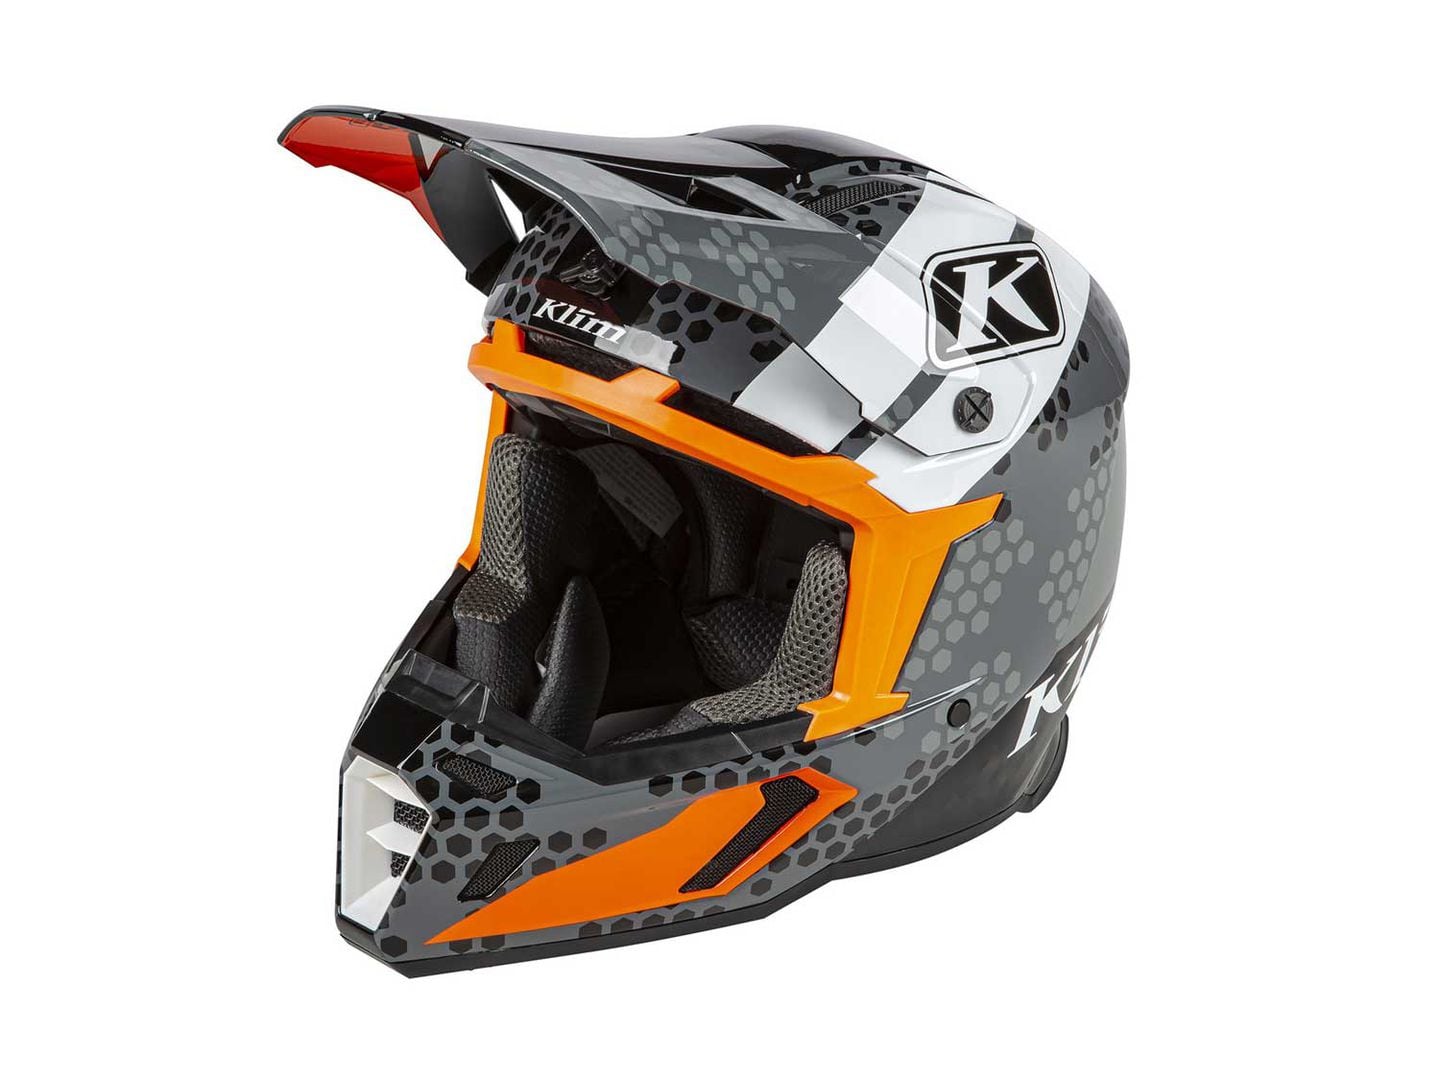 ik ontbijt stijfheid Productiecentrum The Best Dirt Bike Helmets For Motocross And Off-Road Riding | Dirt Rider